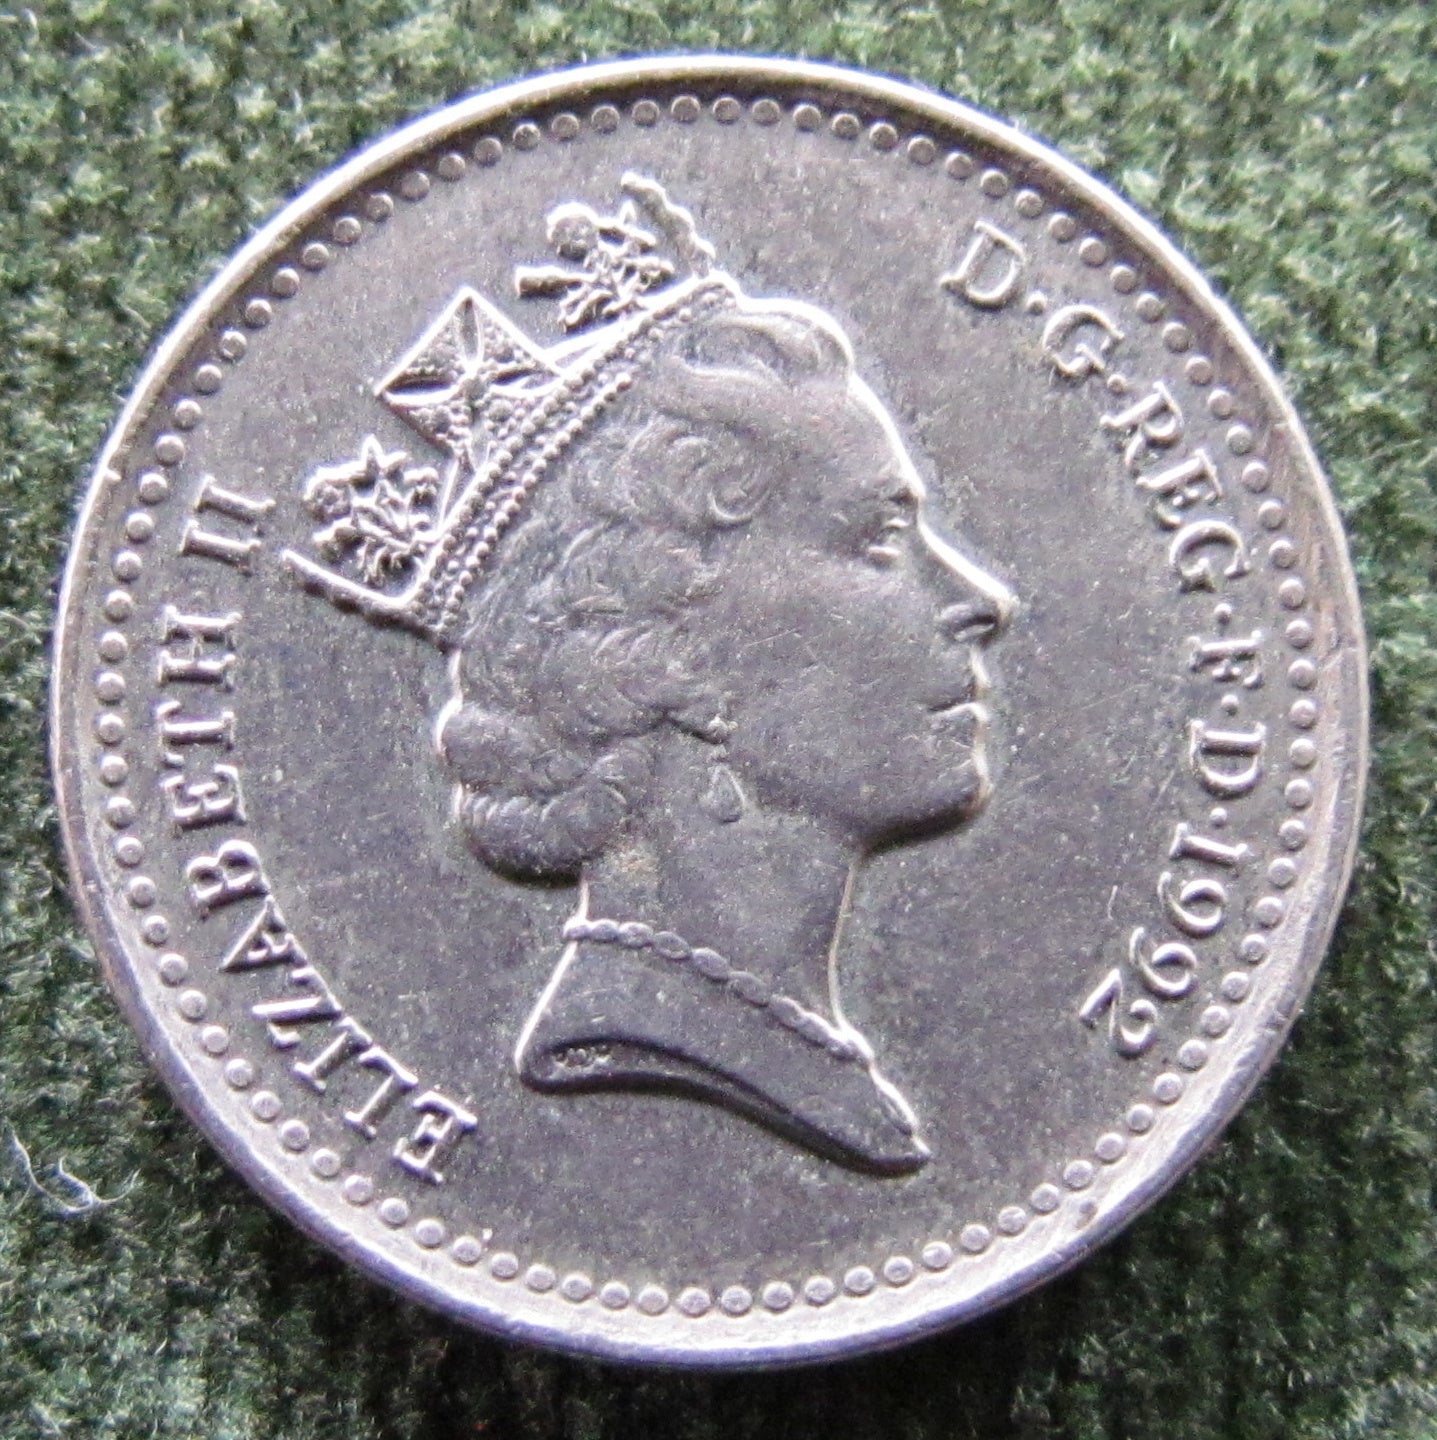 GB British UK English 1992 5 New Pence Queen Elizabeth II Coin